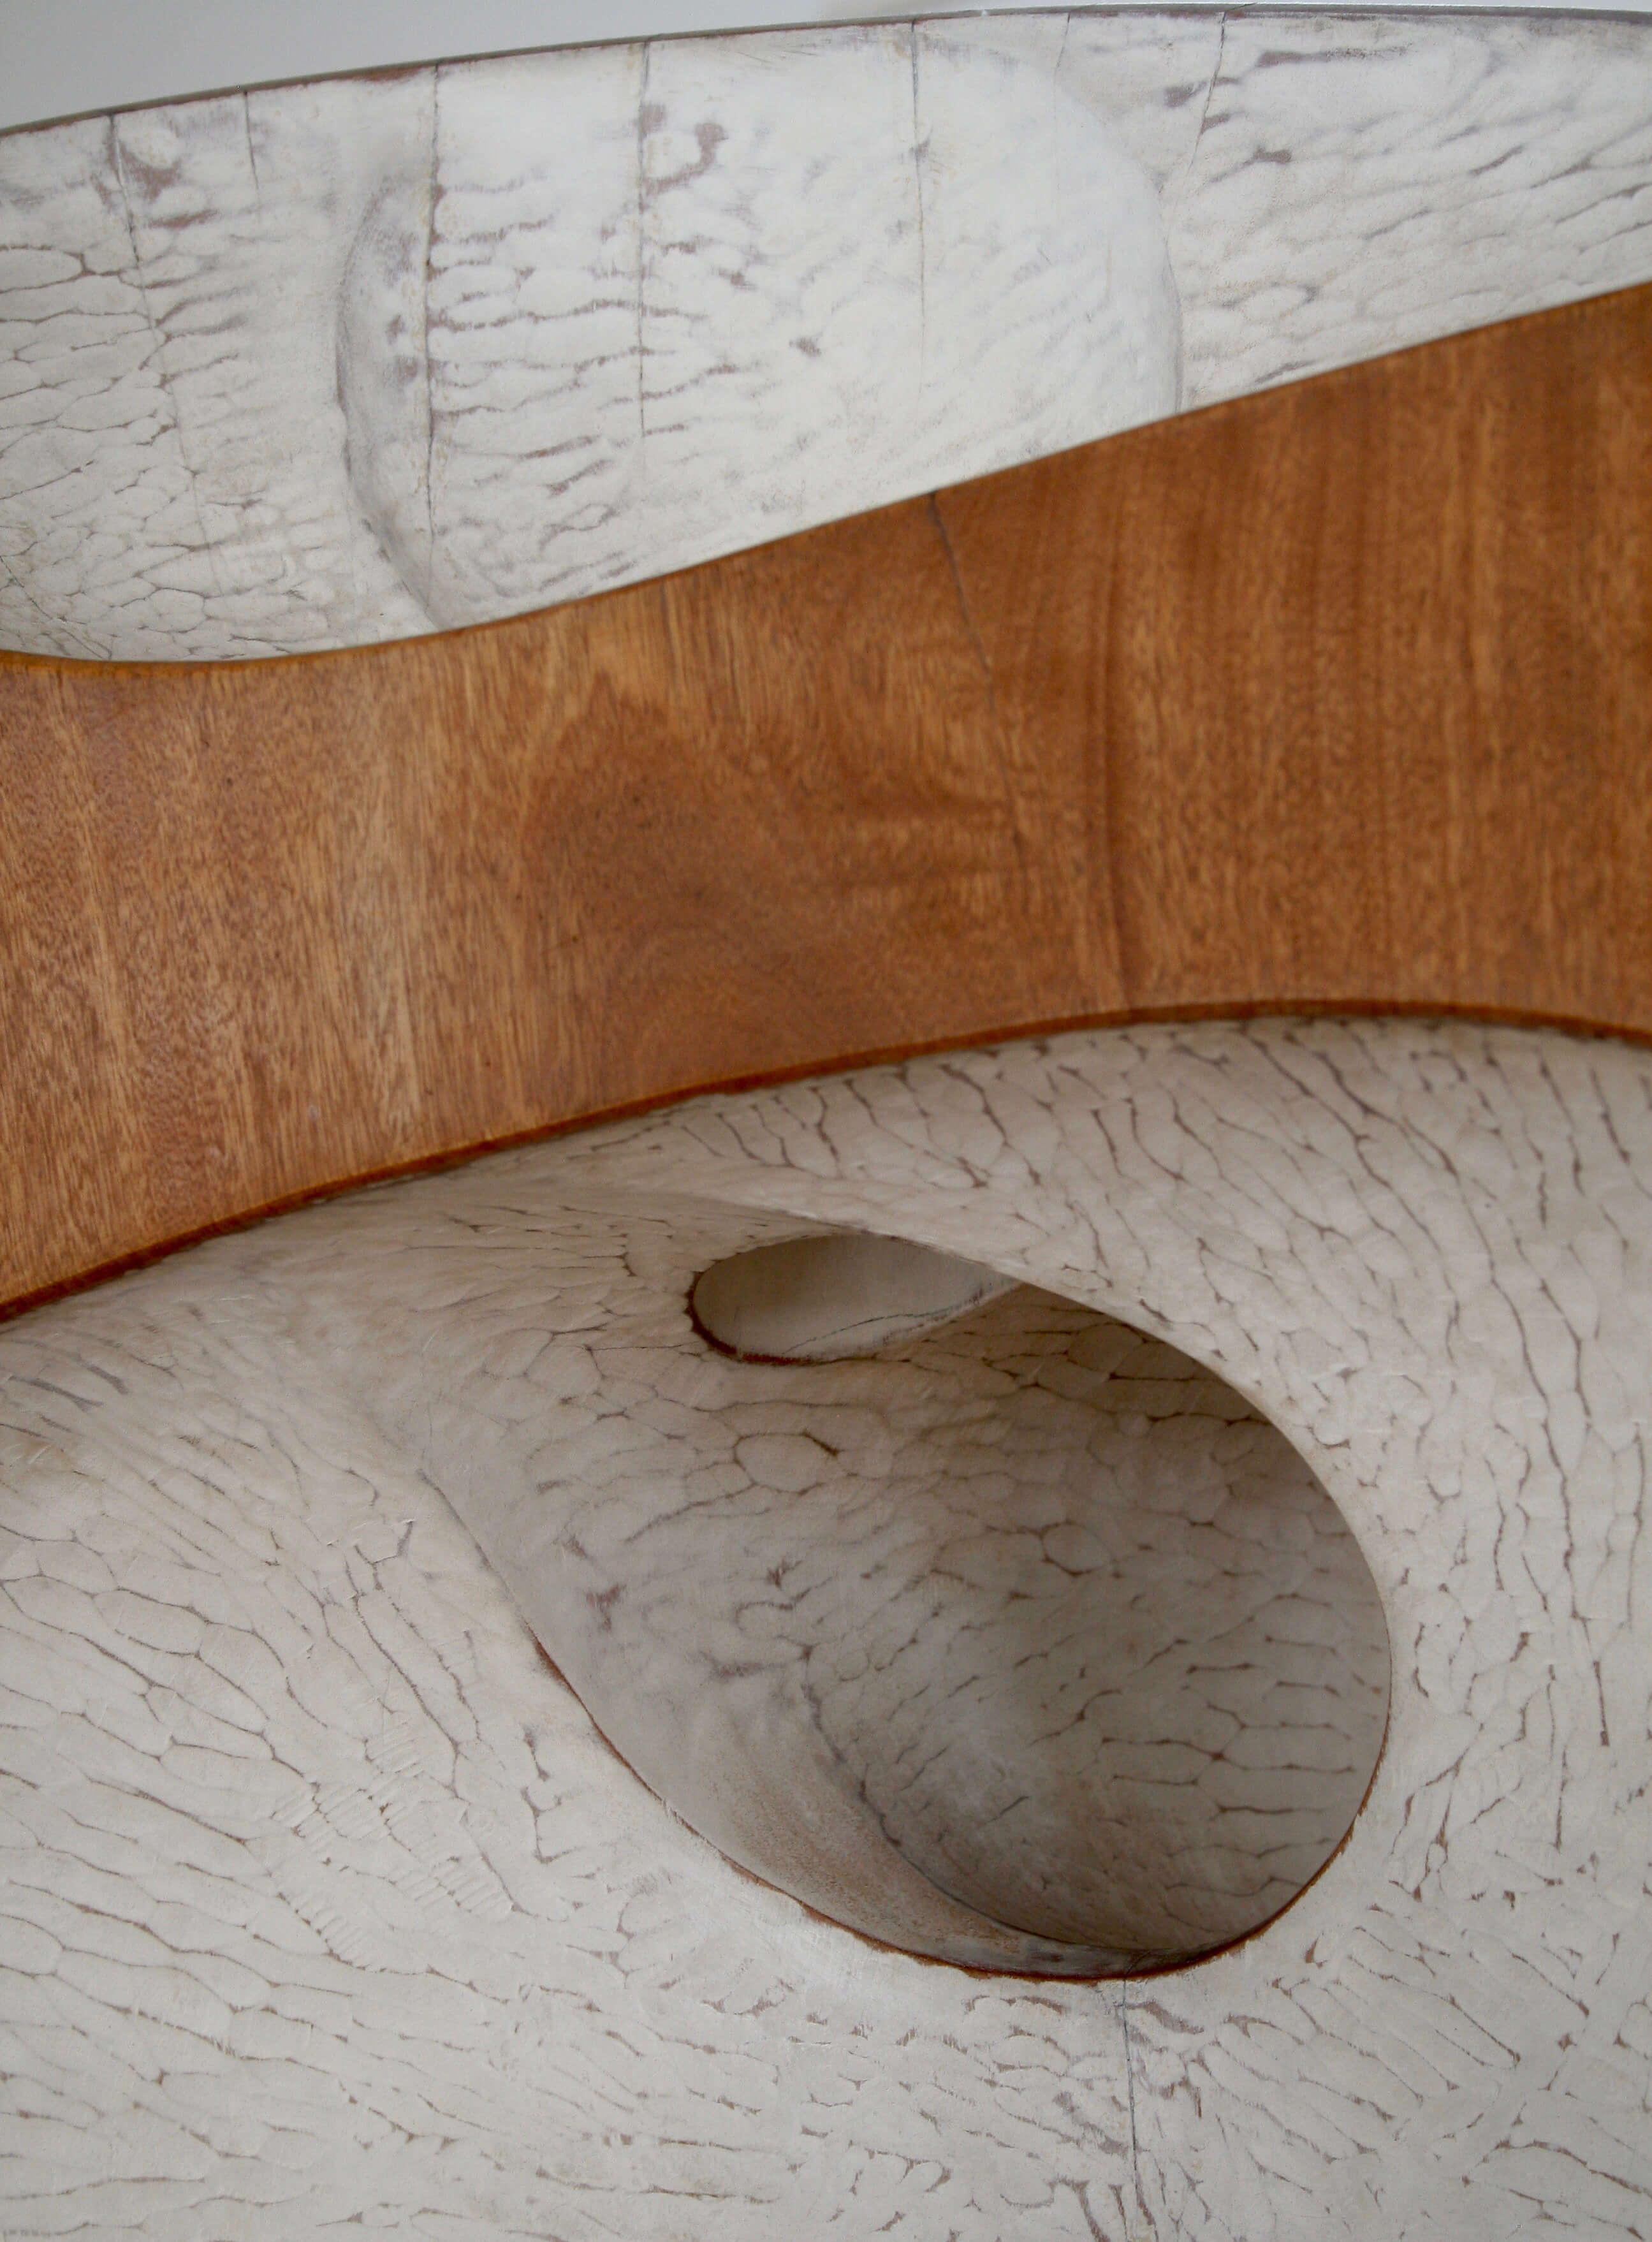 Barbara Hepworth sculpture in the studio, detail